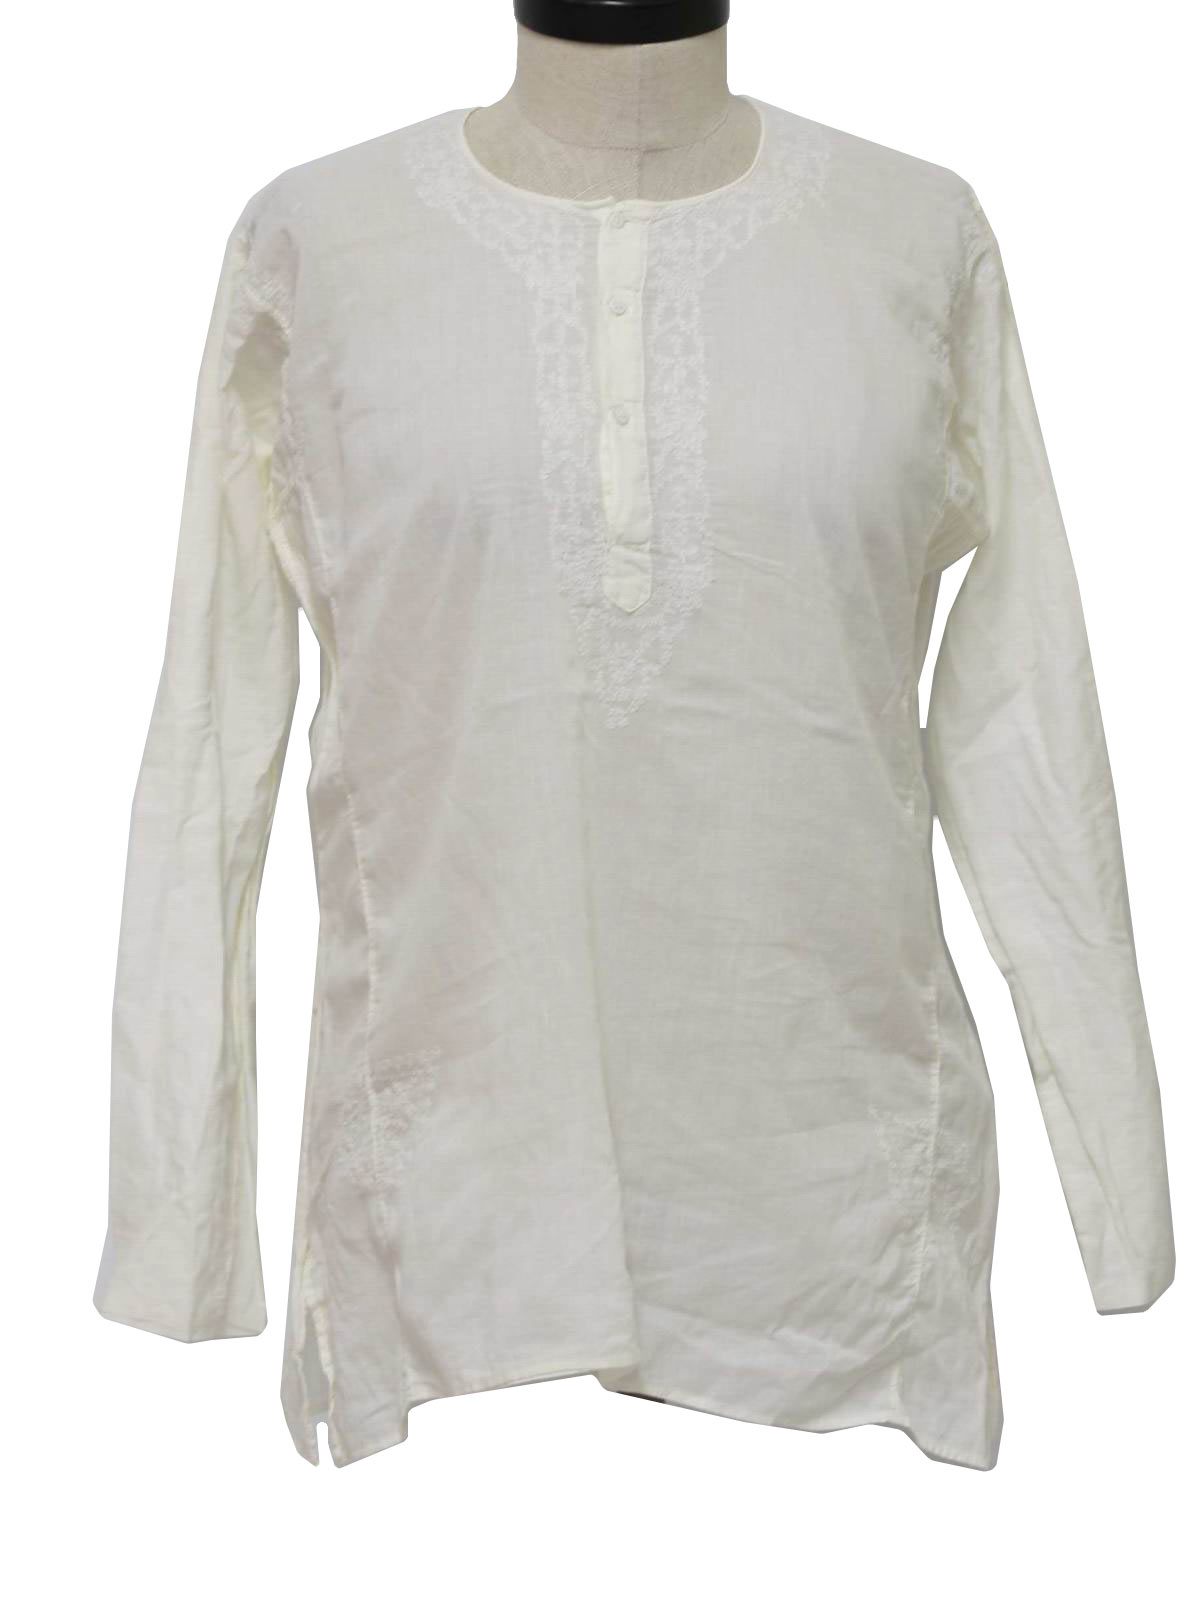 Retro 1990s Hippie Shirt: 90s -no label- Womens white semi-sheer cotton ...